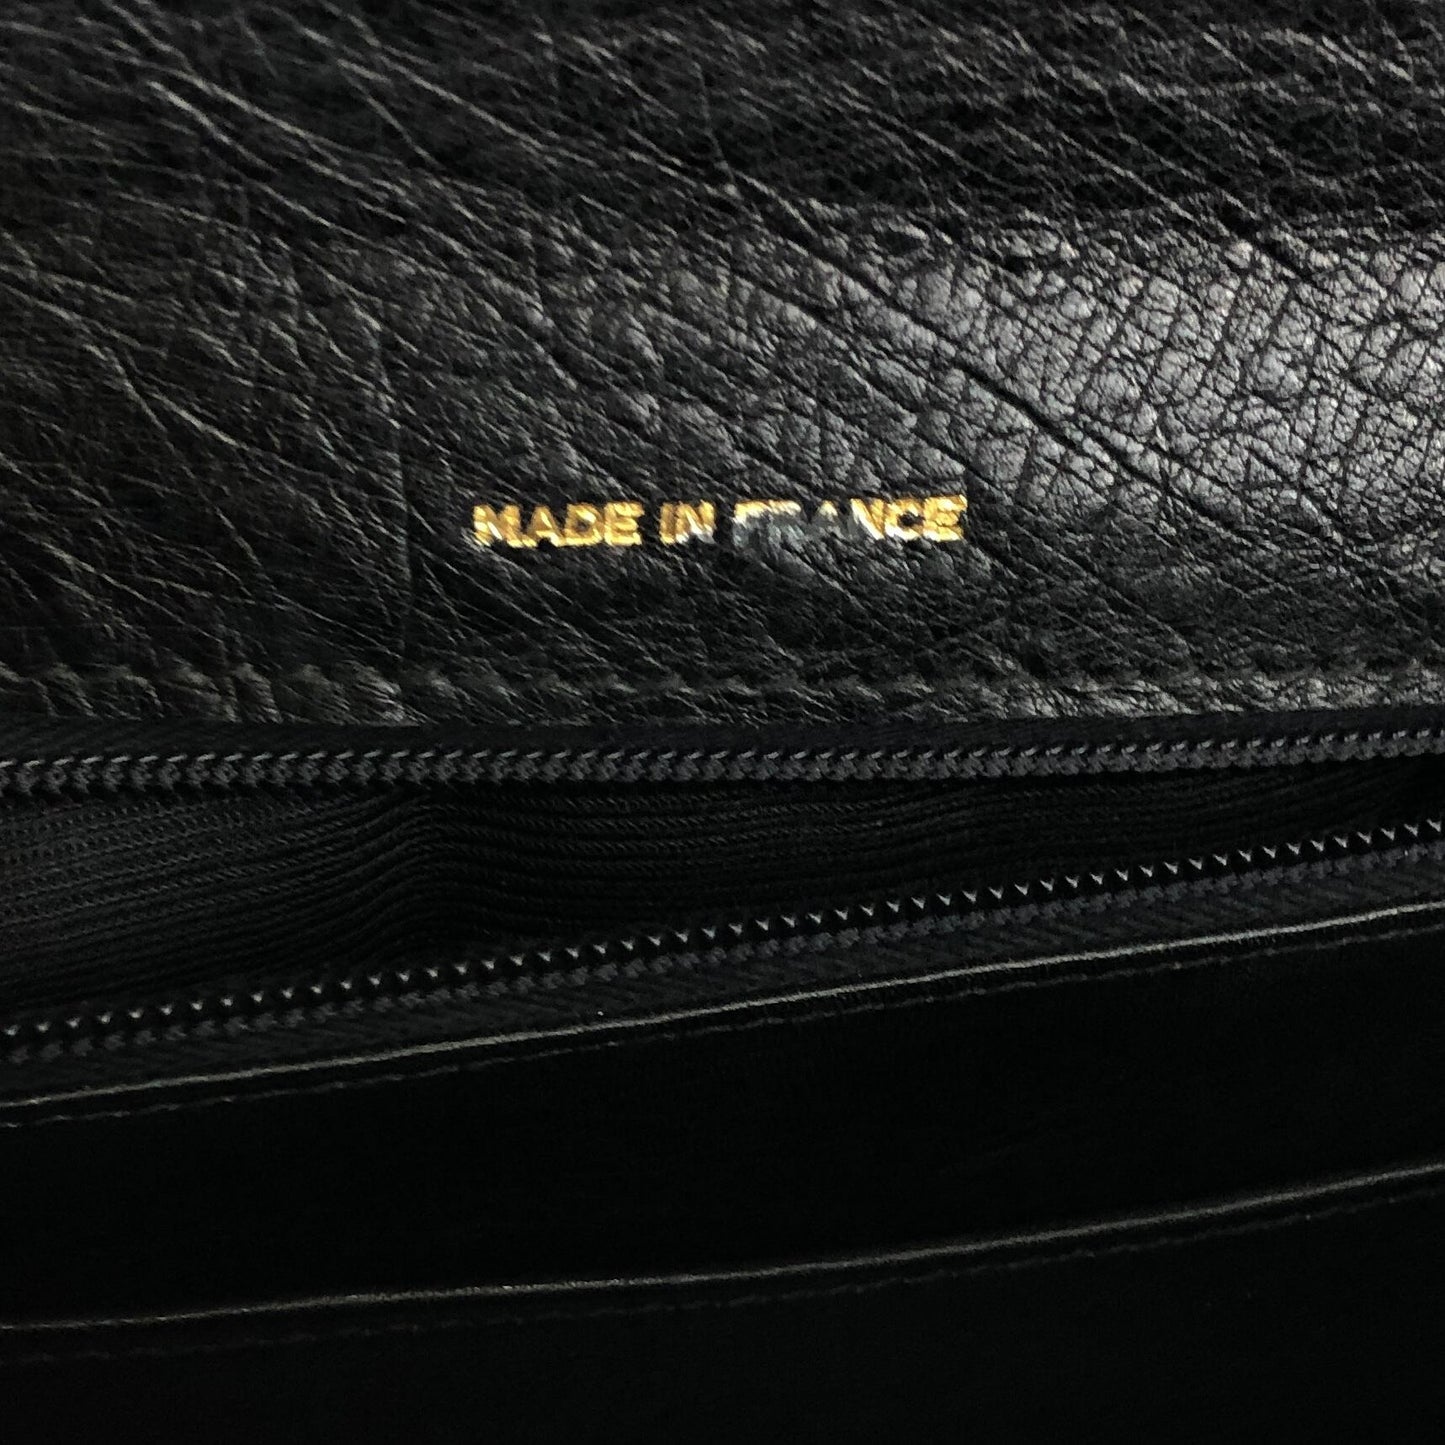 CELINE Mantel Chain Gancini Ostrich Leather Kelly Handbag Black Vintage Old CELINE auwsc2